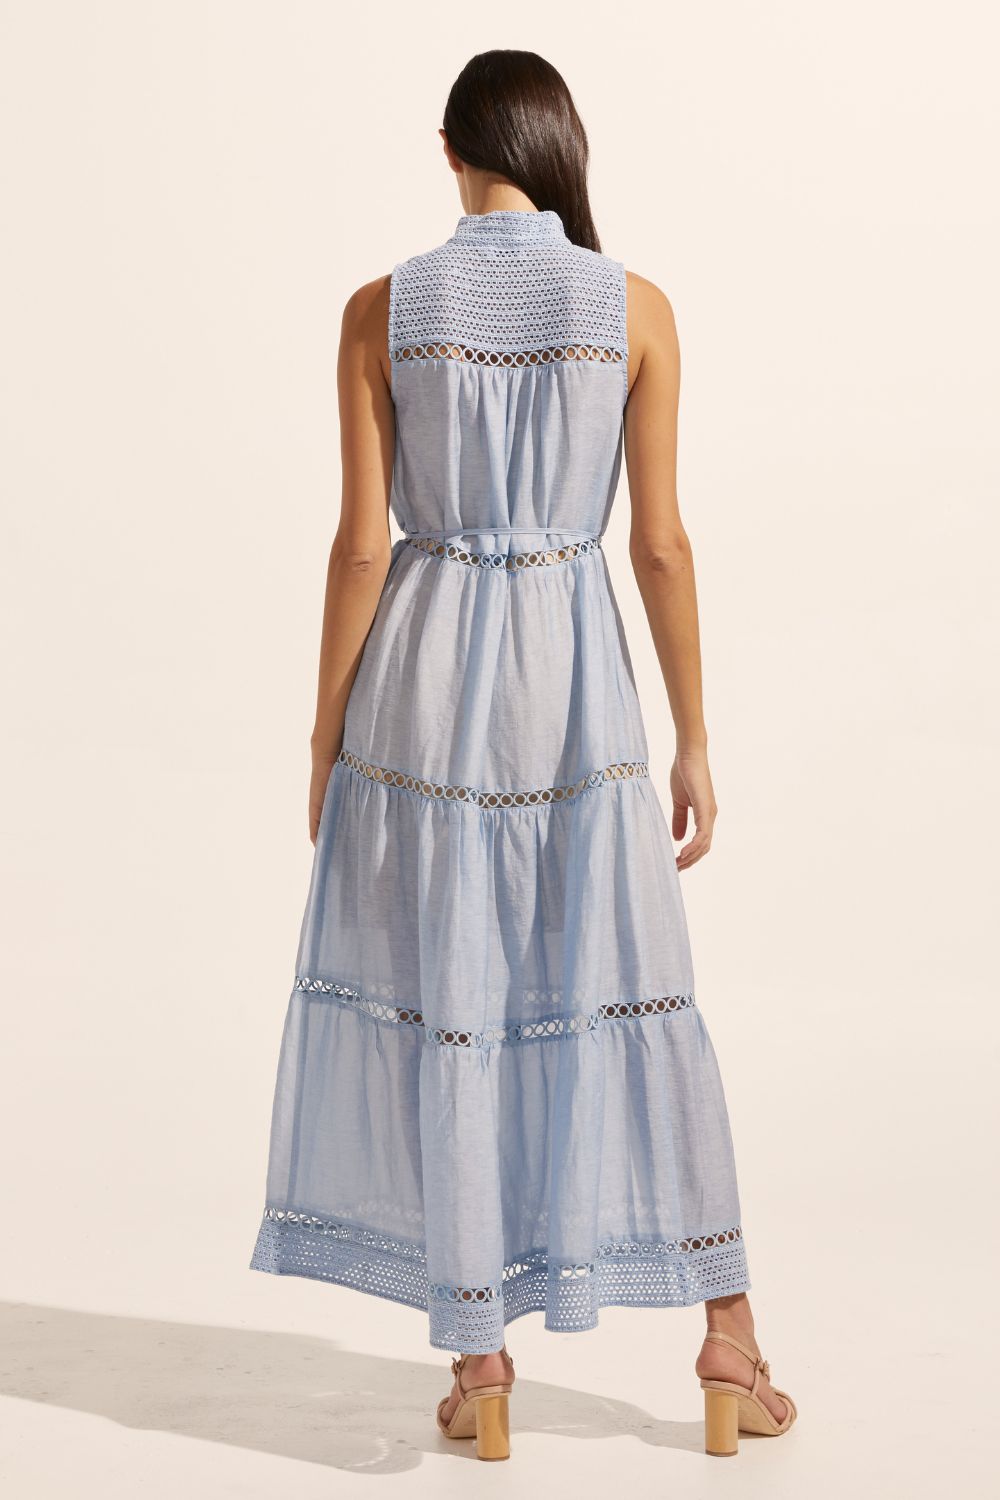 blue, maxi dress, sleeveless, button down centre, high neck, circular lace design, self tie fabric belt, back image